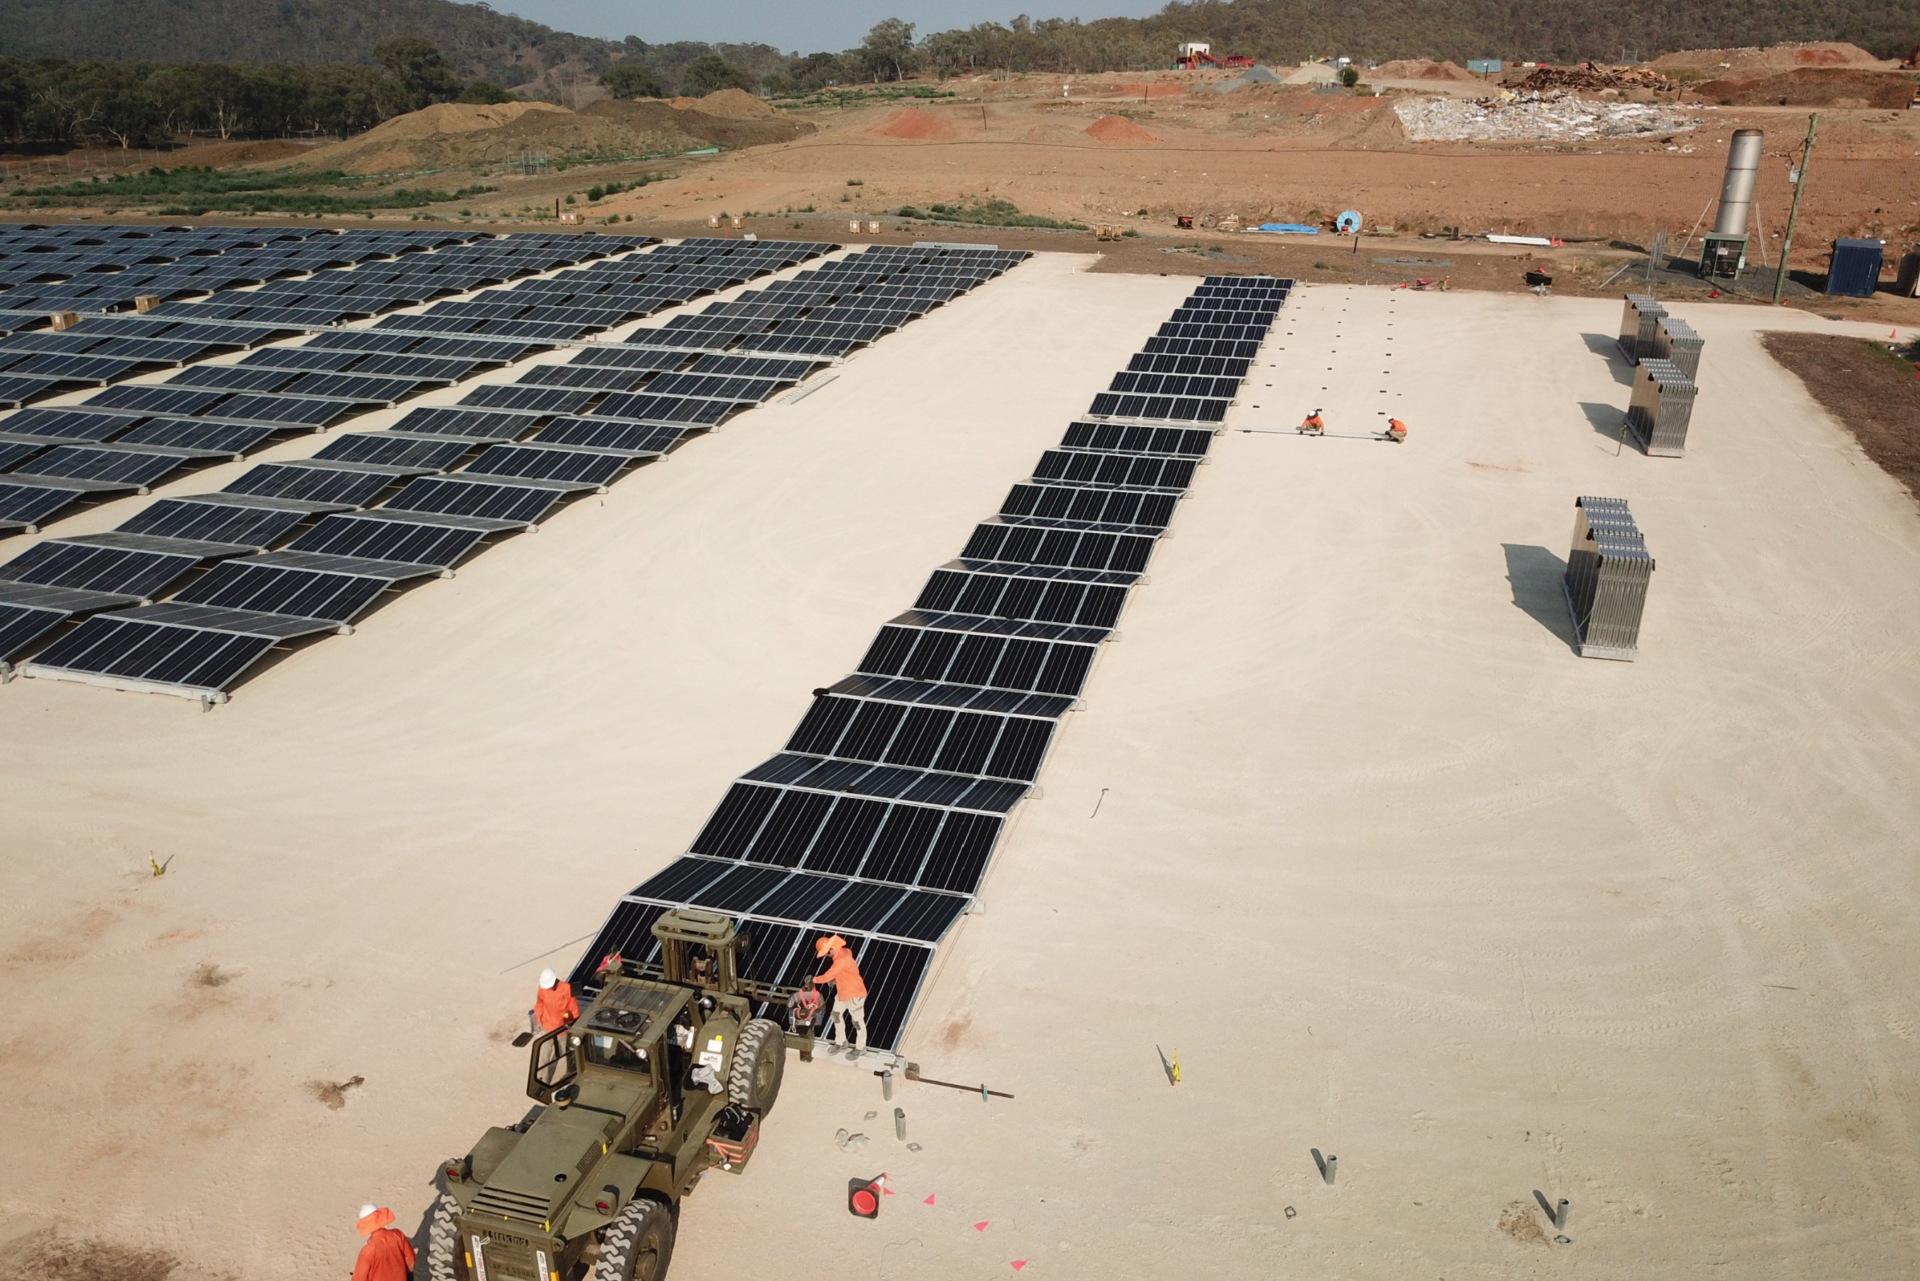 California sets solar peak production record, 1¢/kWh Solar in Saudi Arabia, & more! #40